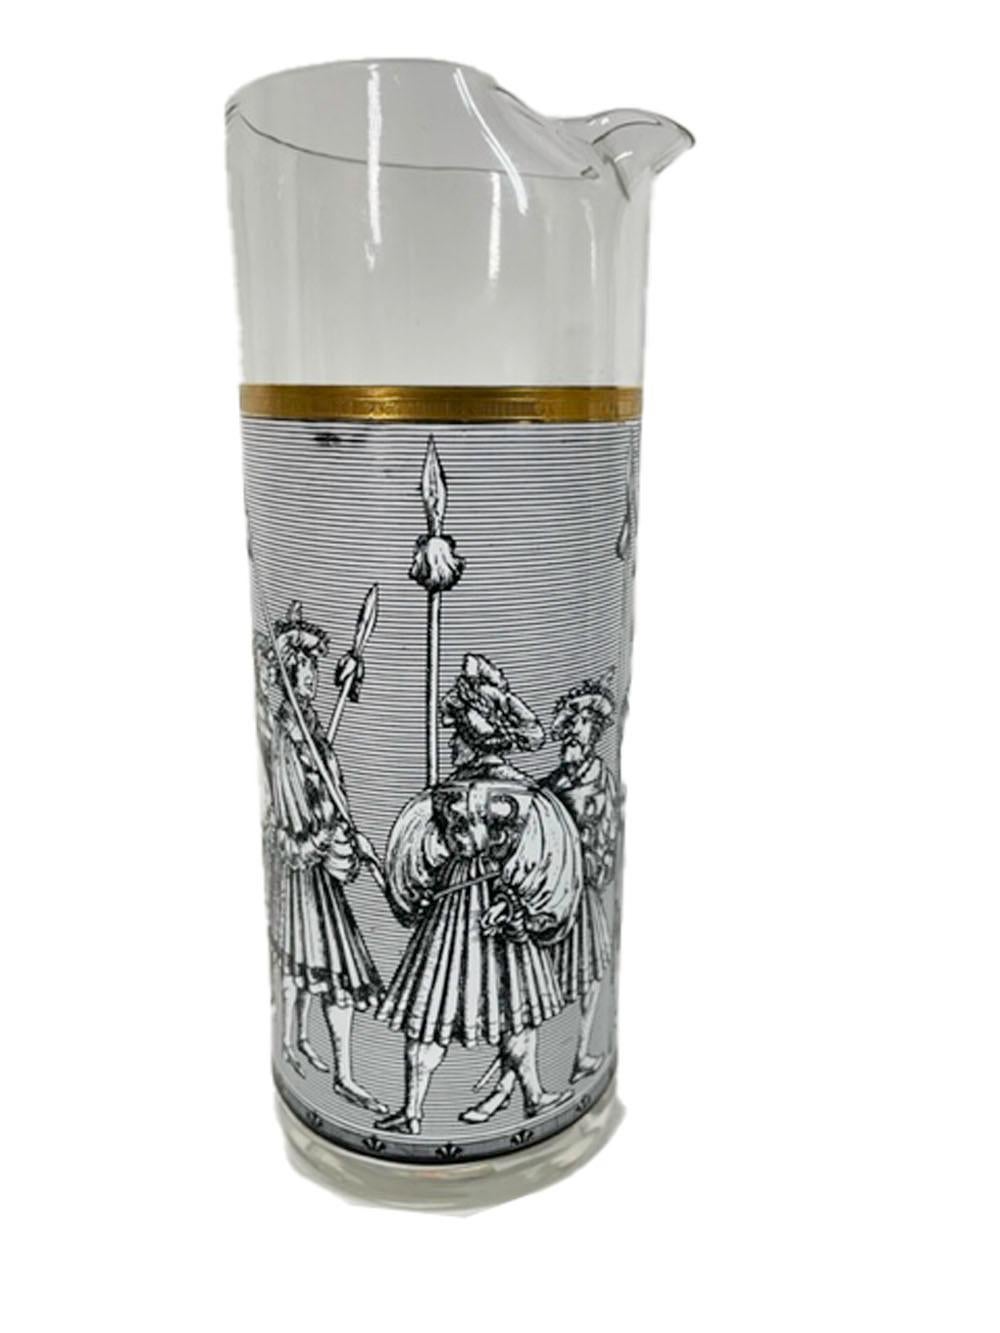 Vintage Cera Glassware Camelot Pattern Cocktail Set in Black and White For Sale 3